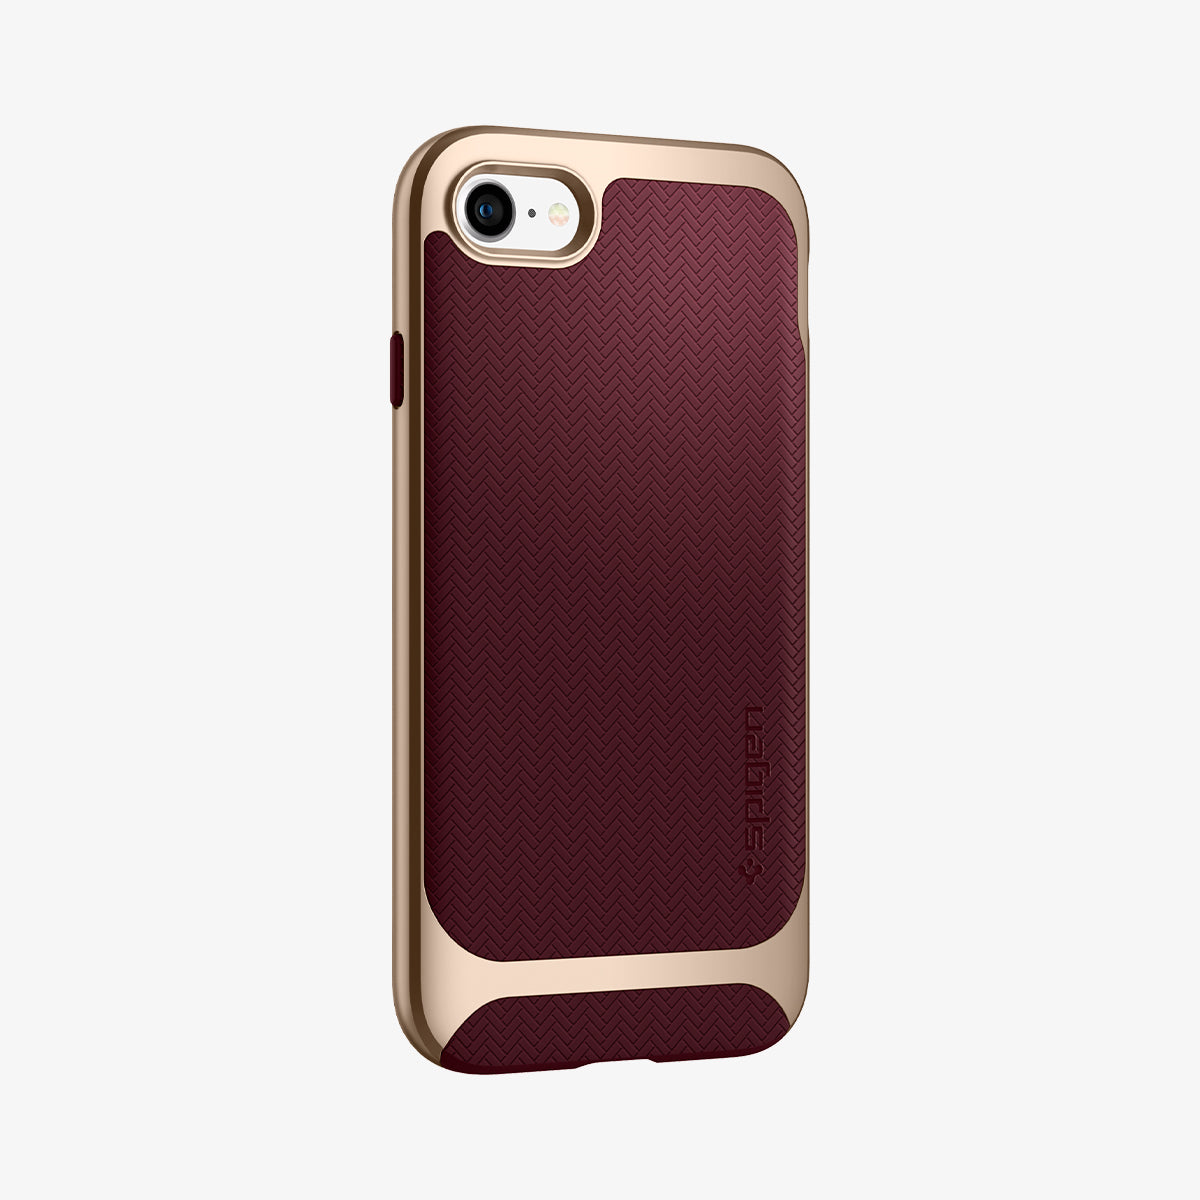 054CS22198 - iPhone SE Neo Hybrid Herringbone case in burgundy showing the back